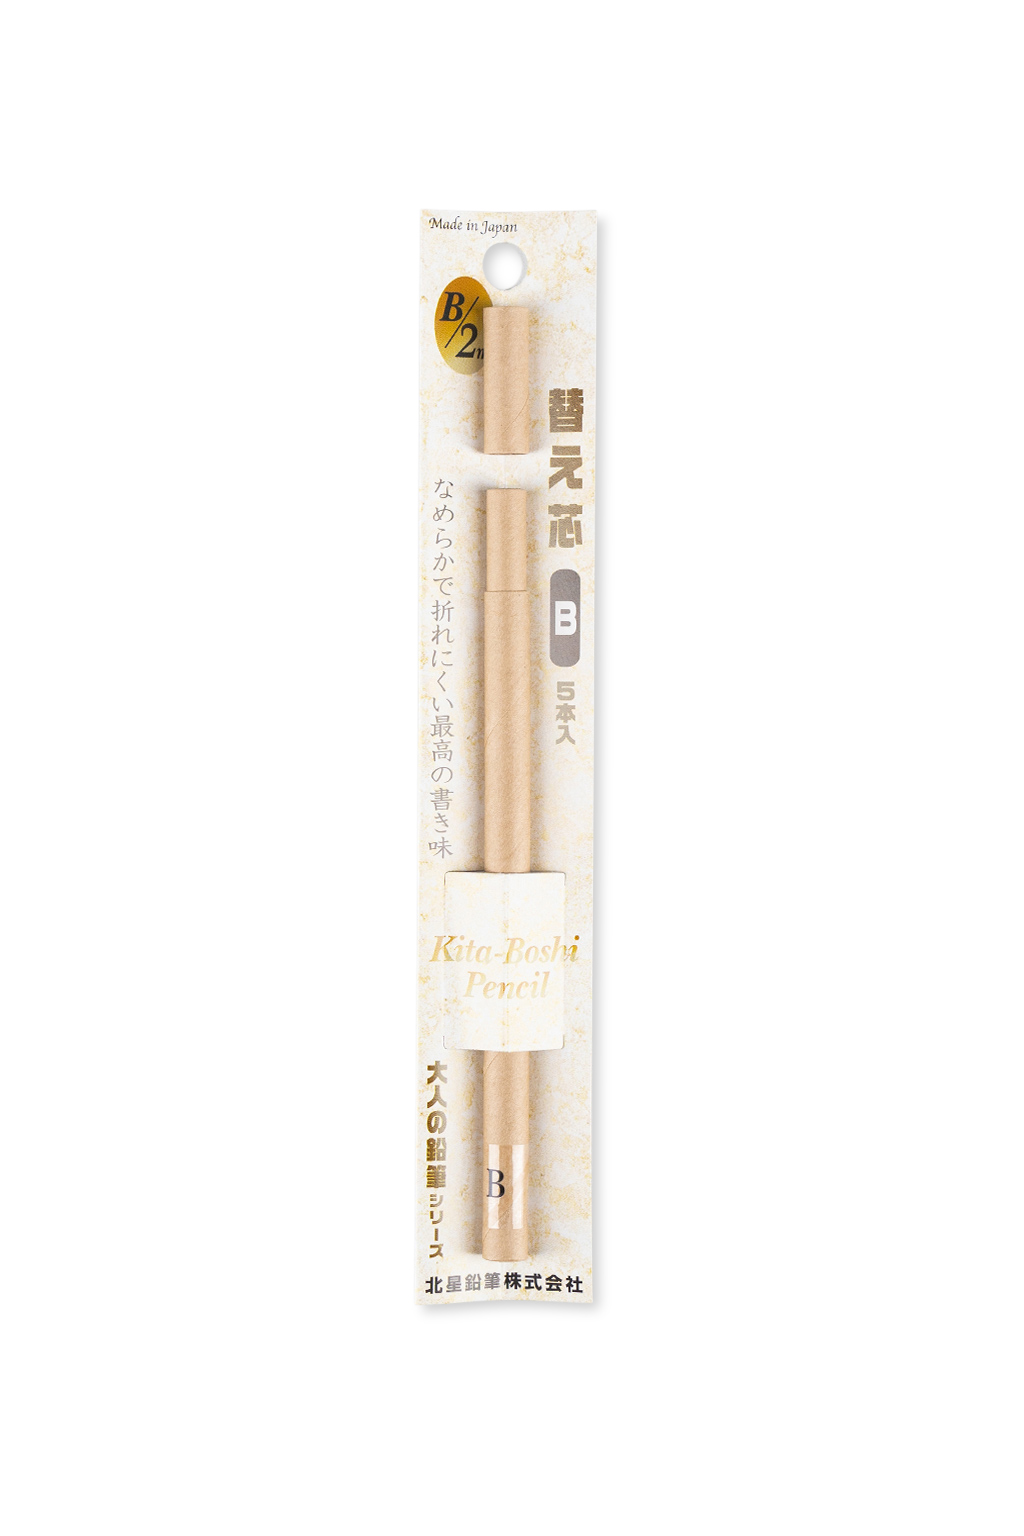 Kitaboshi Pencil Grown-up Pencil 2mm/Lead B(5pcs)